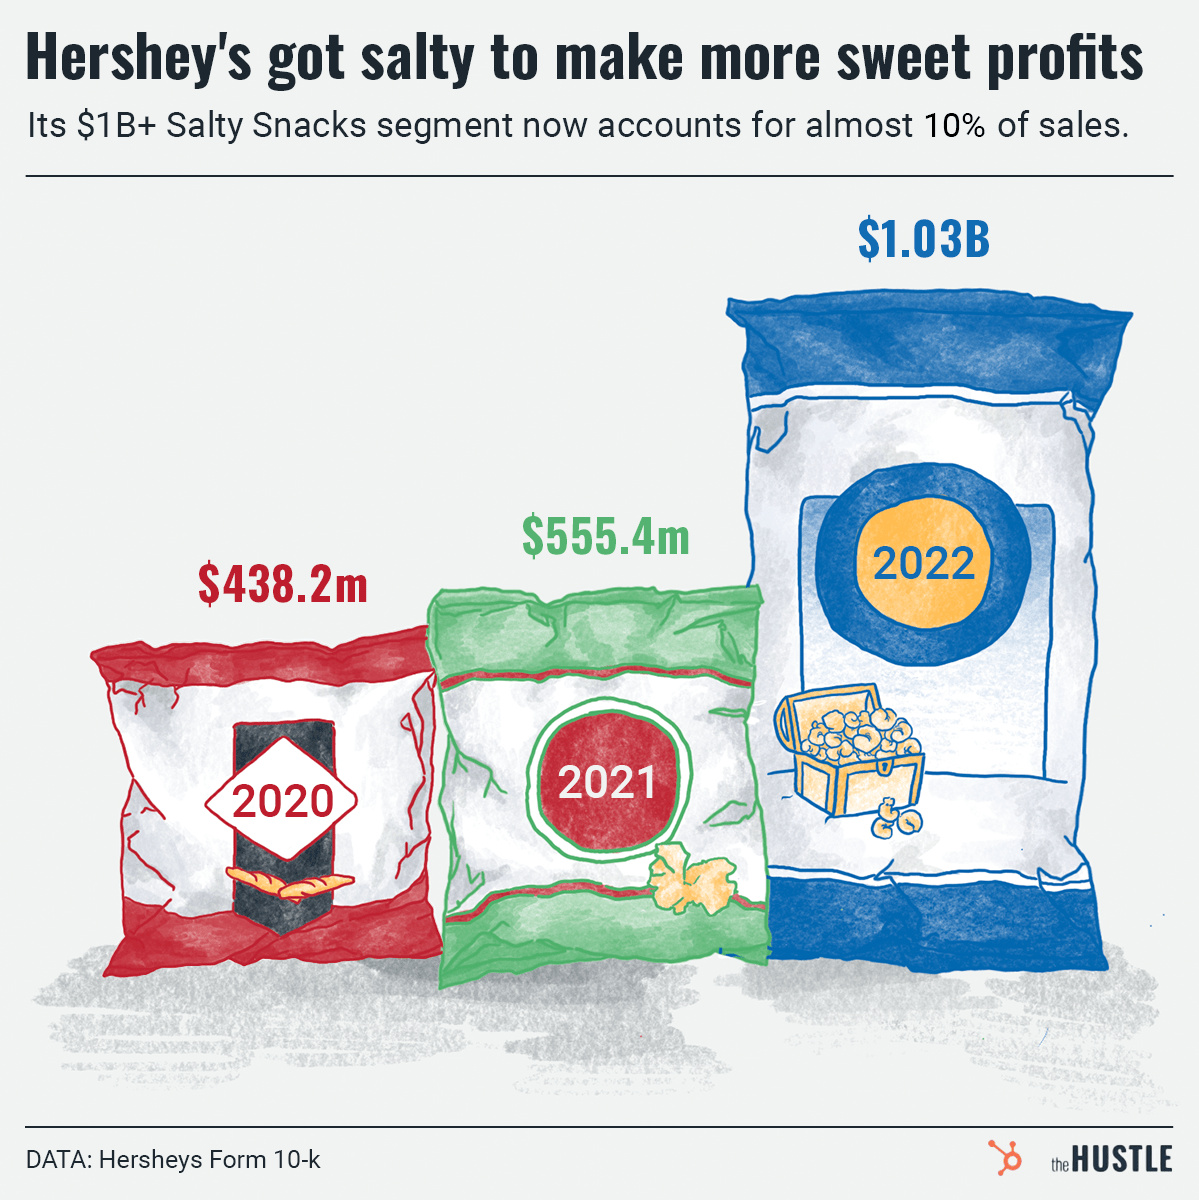 Hershey's salty snack segment